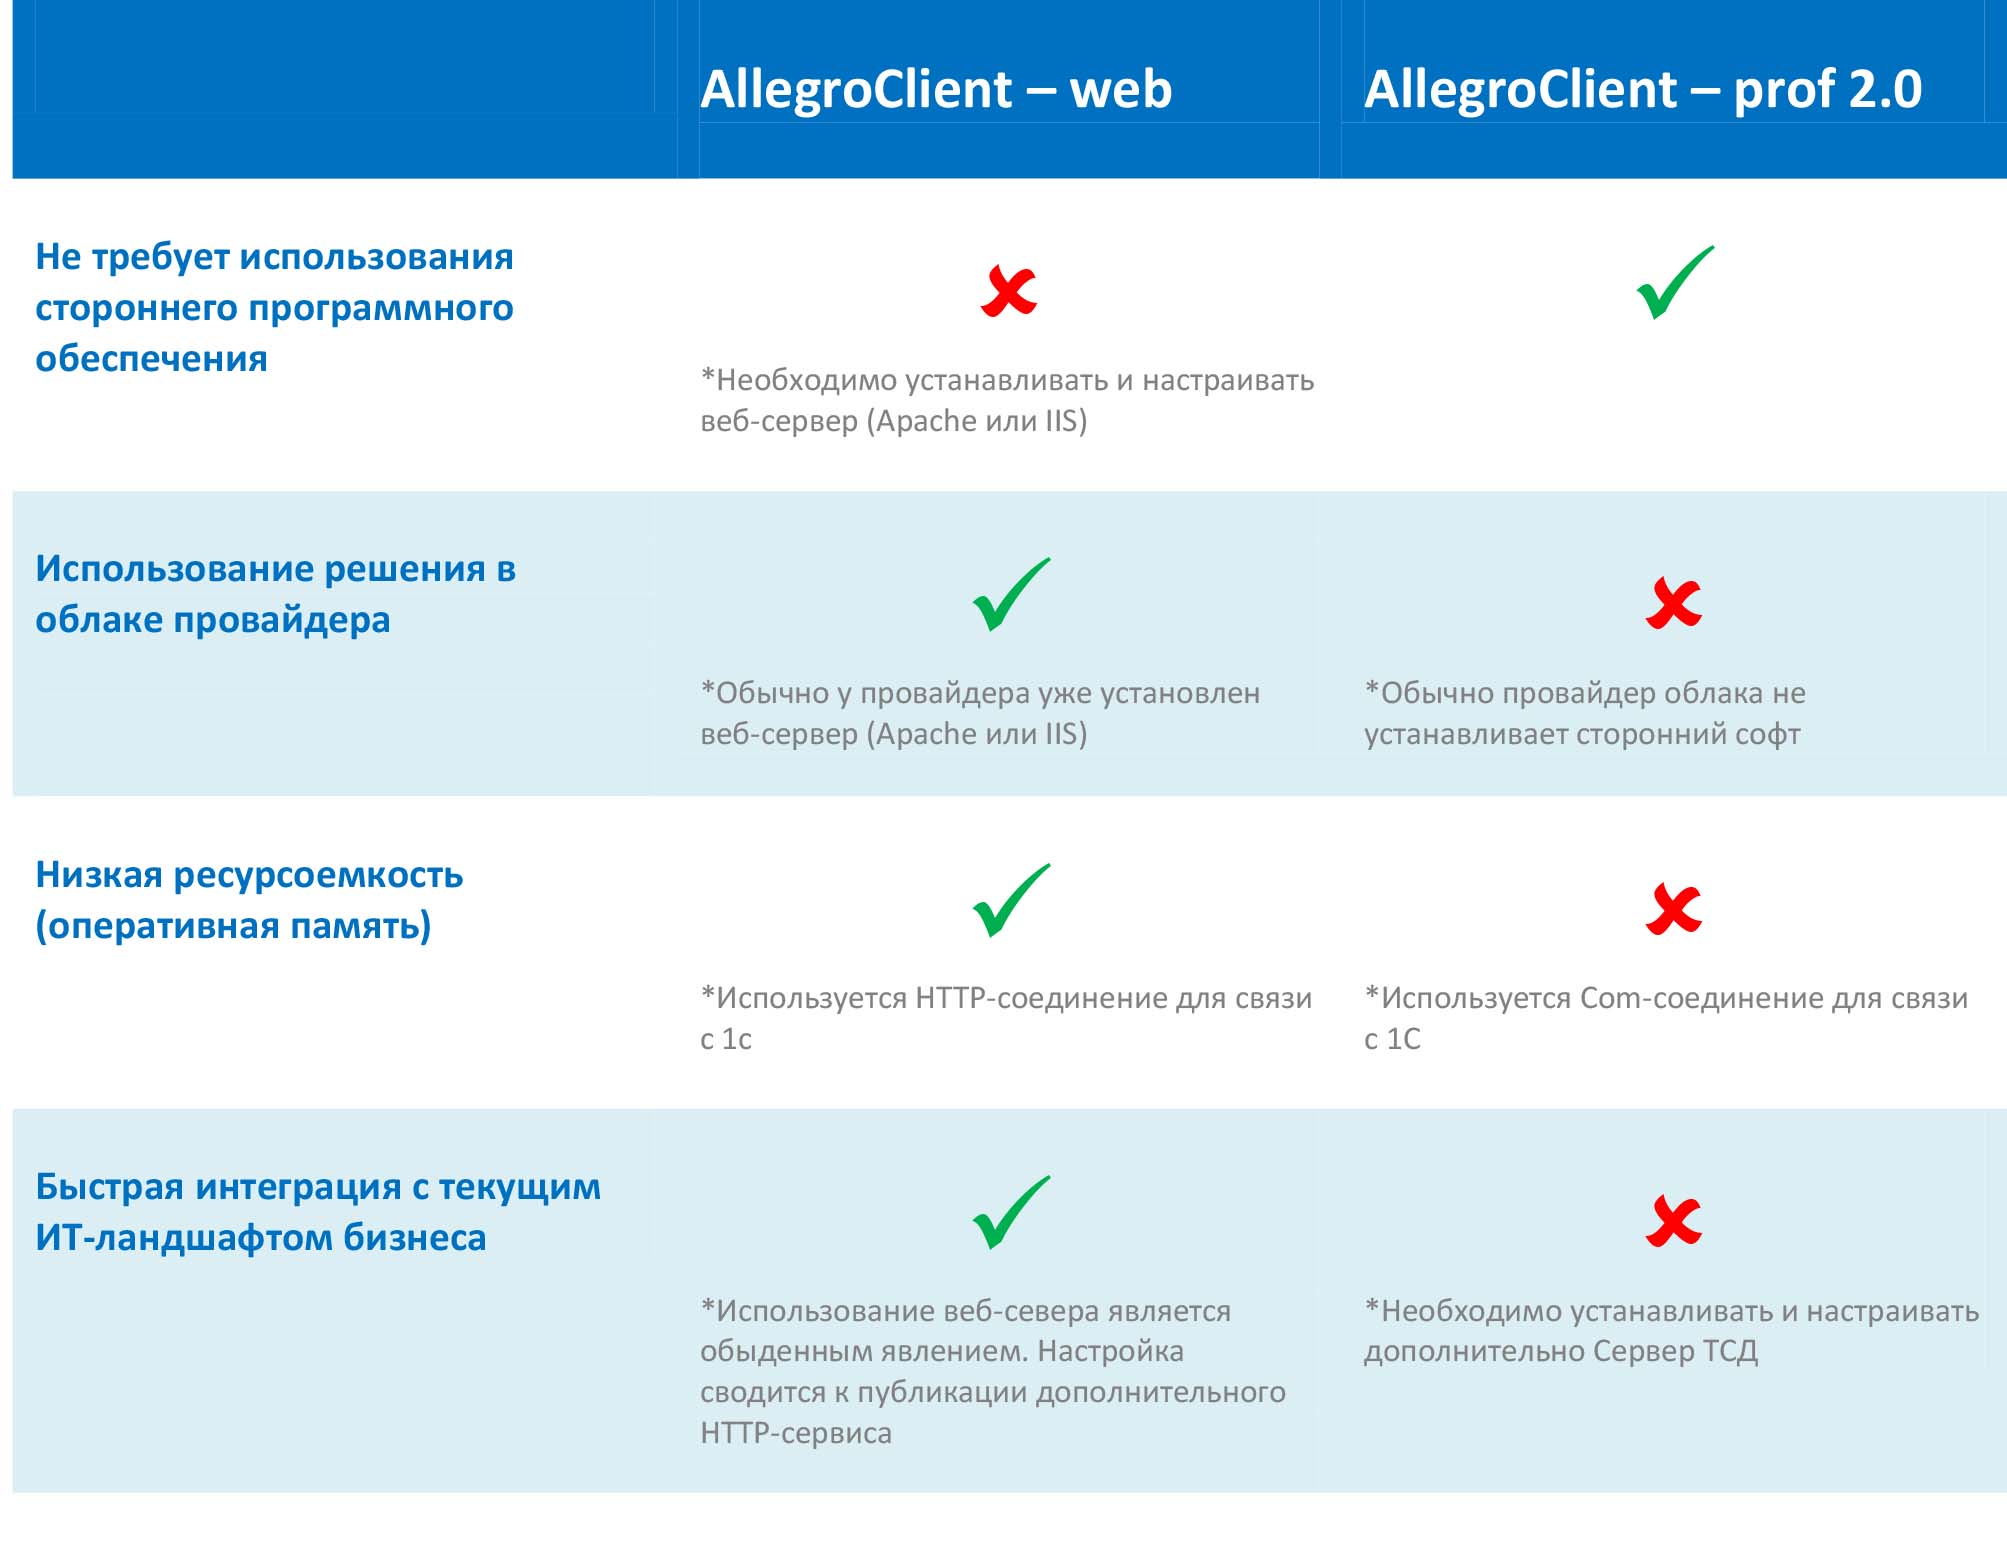 Сравнение решений АллегроClient-web и AllegroClient-prof 2.0